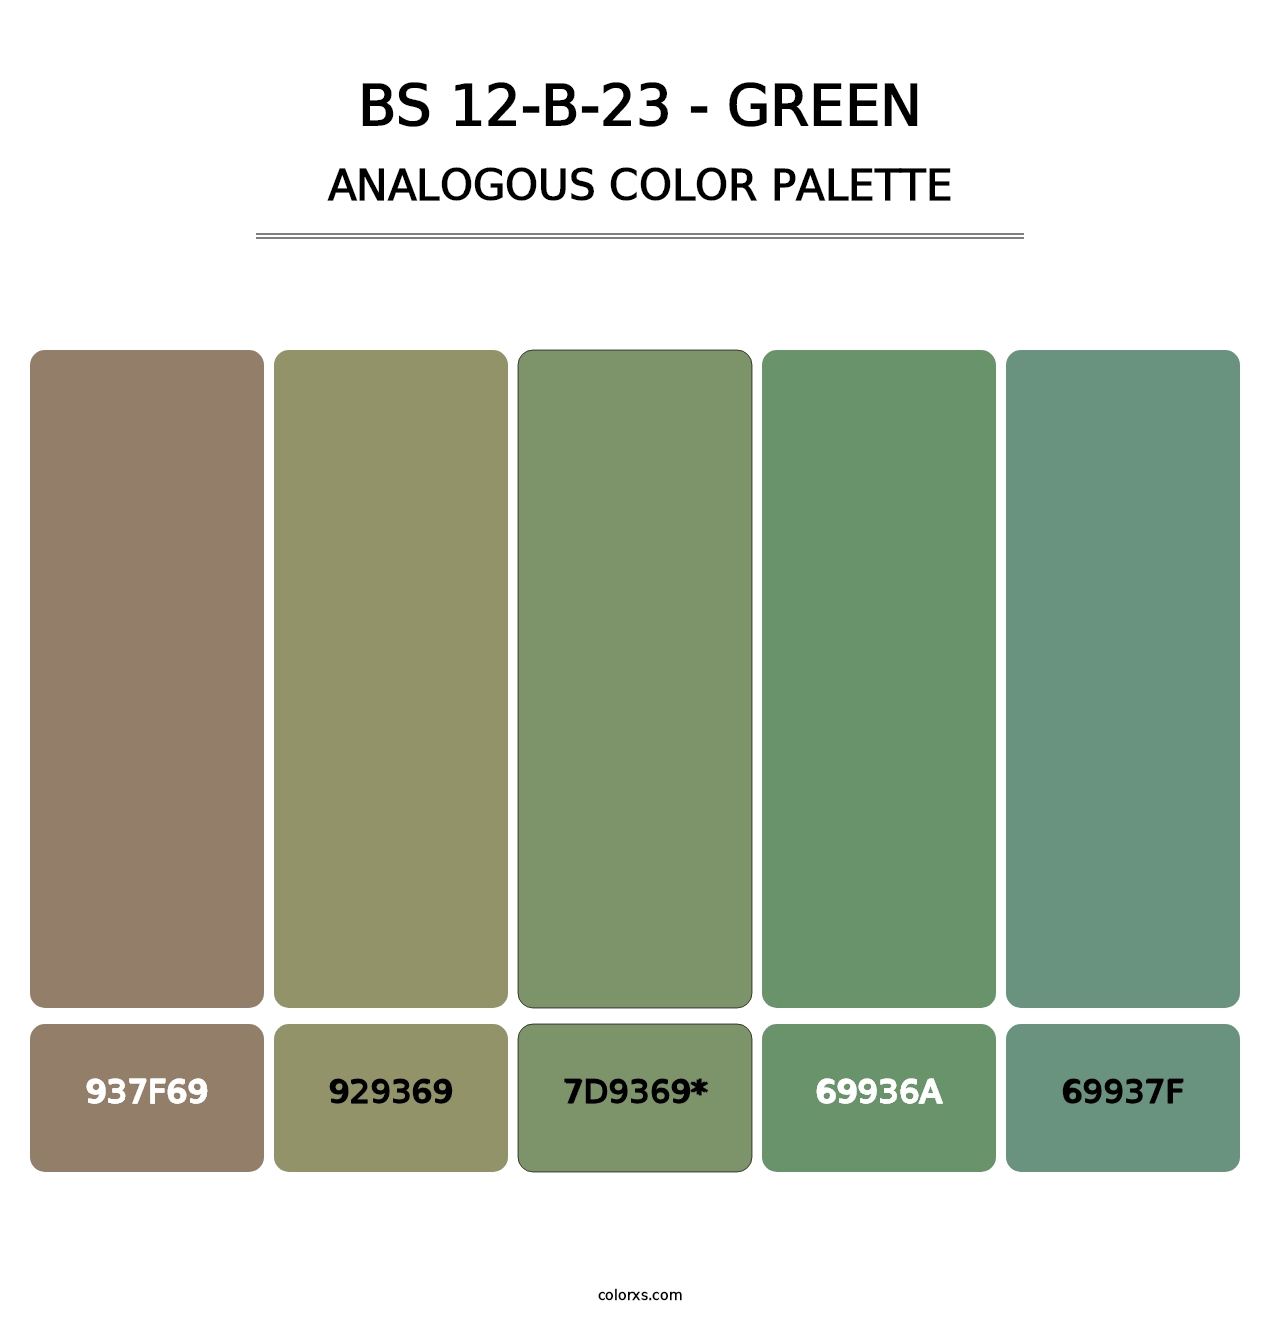 BS 12-B-23 - Green - Analogous Color Palette